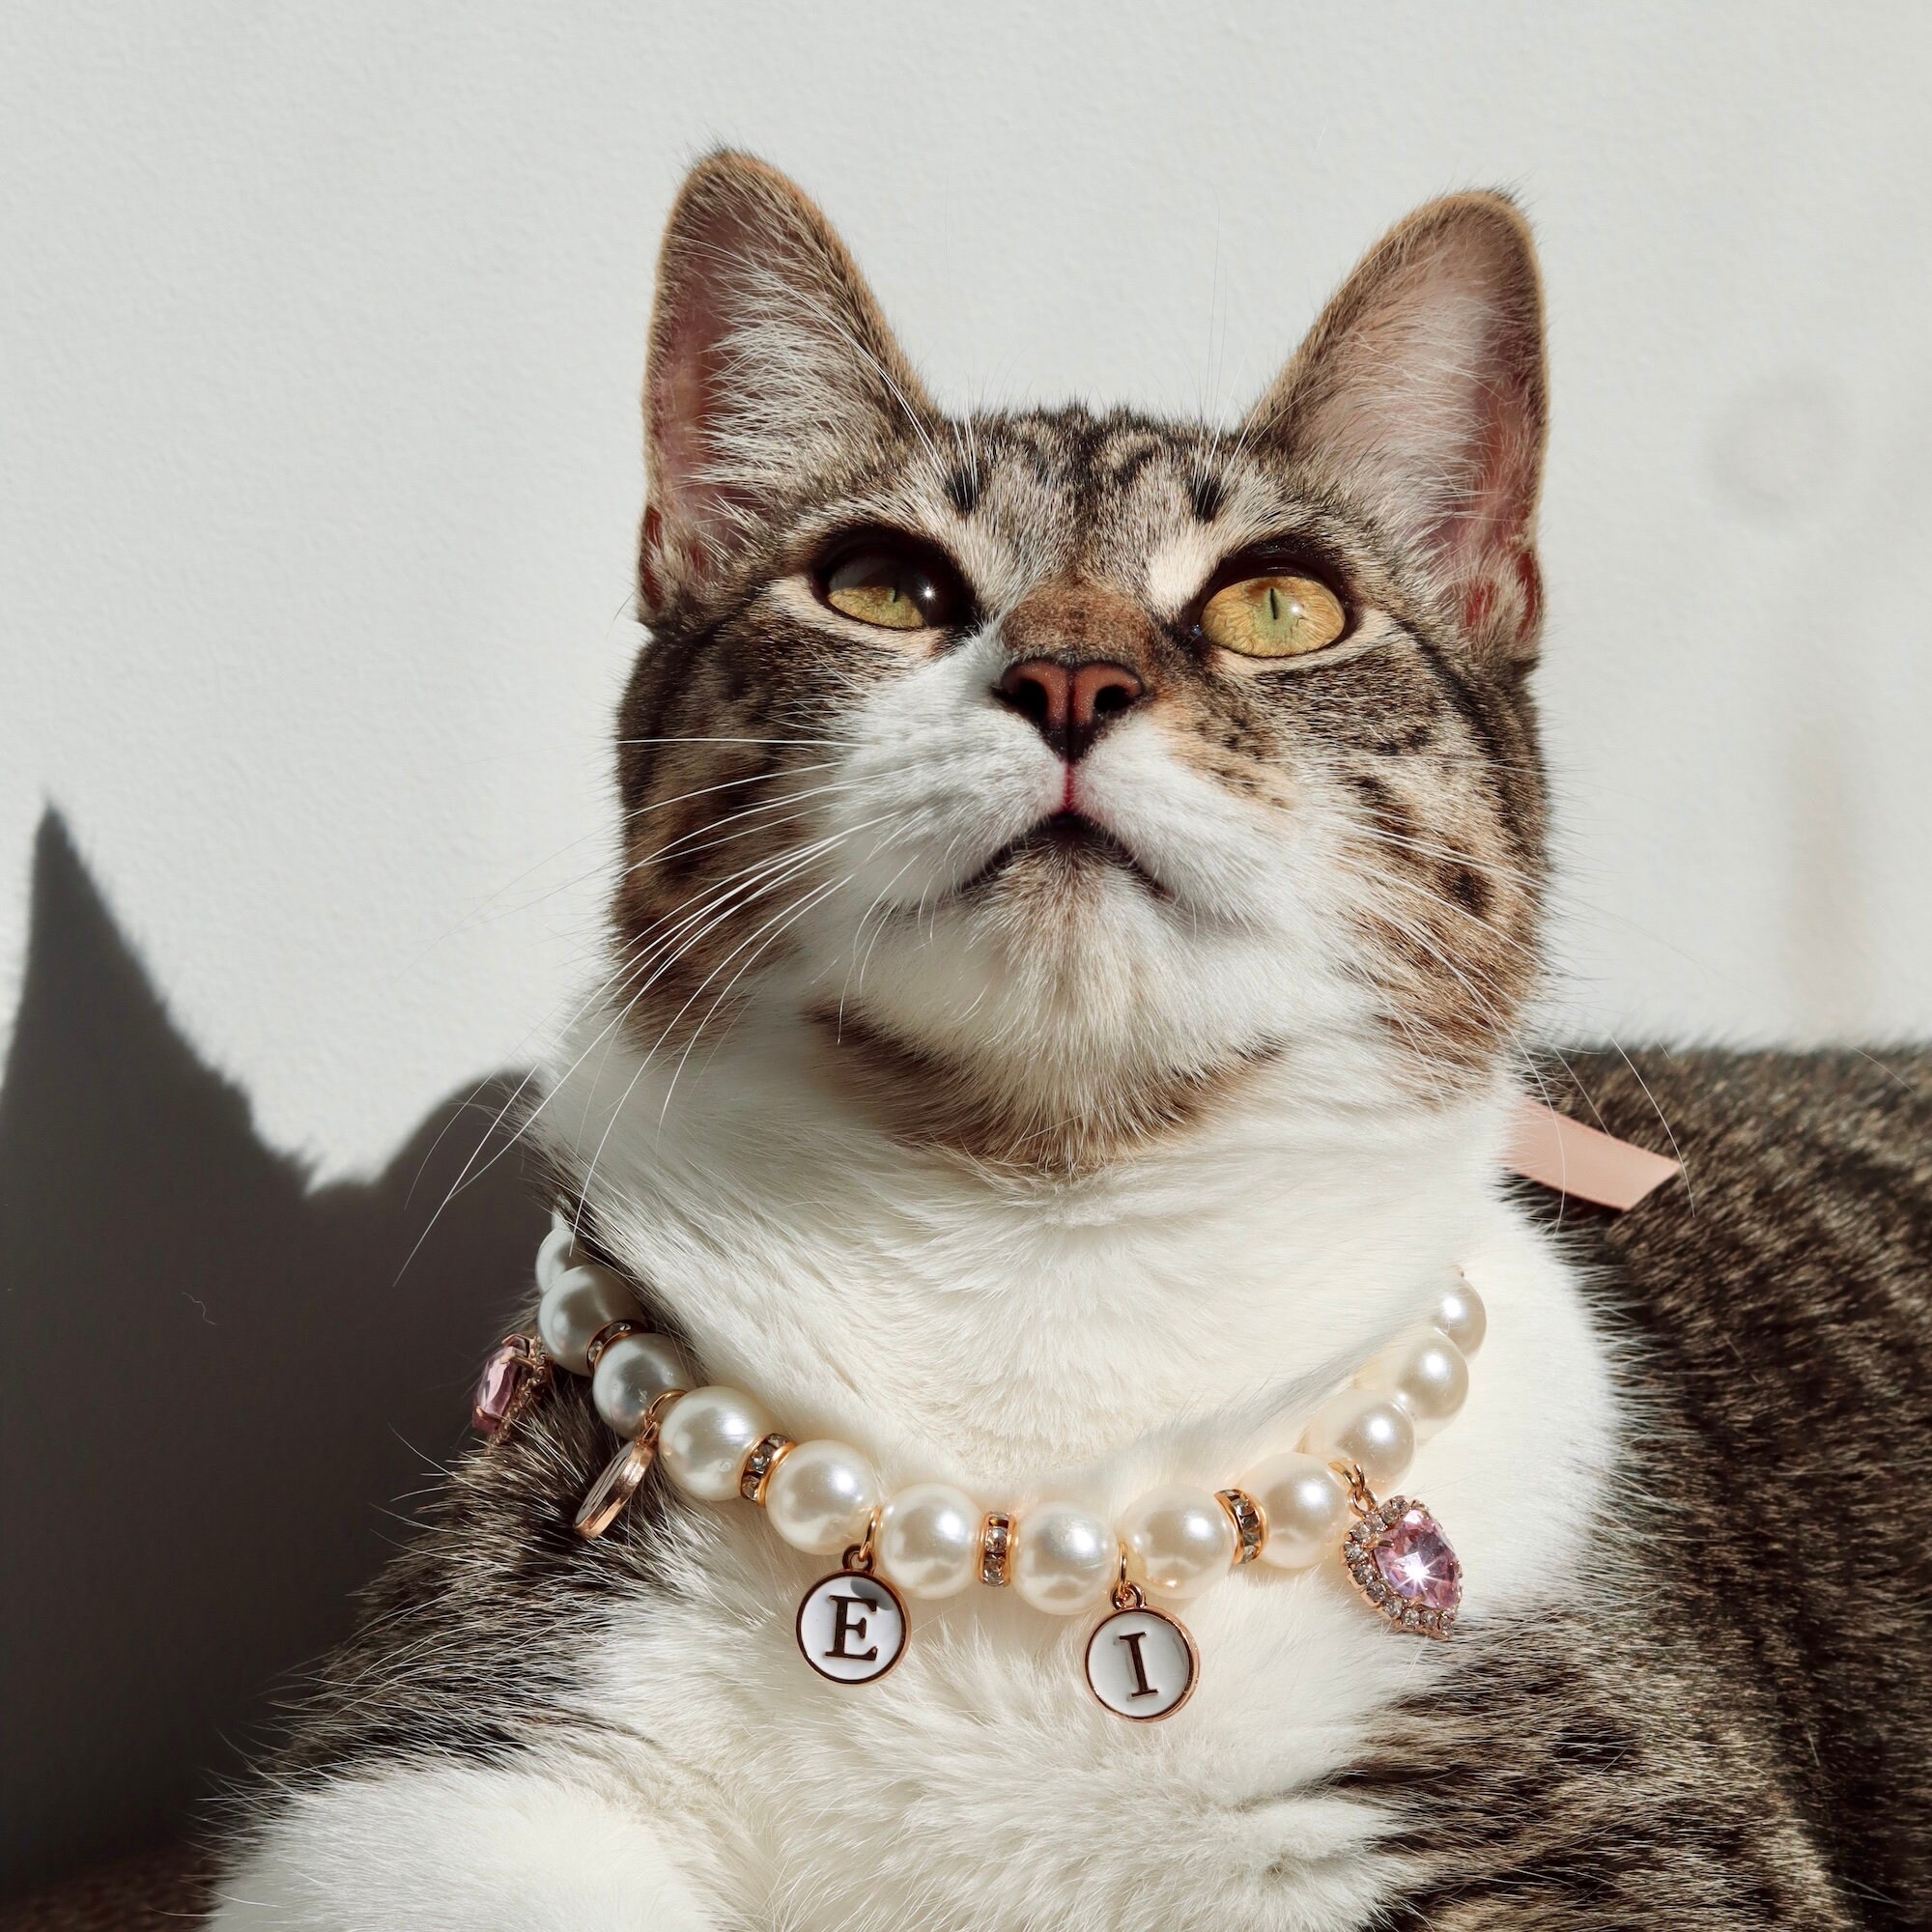 Designer dog collars, luxury cat collars, fancy harnesses, pet clothes,  accessories